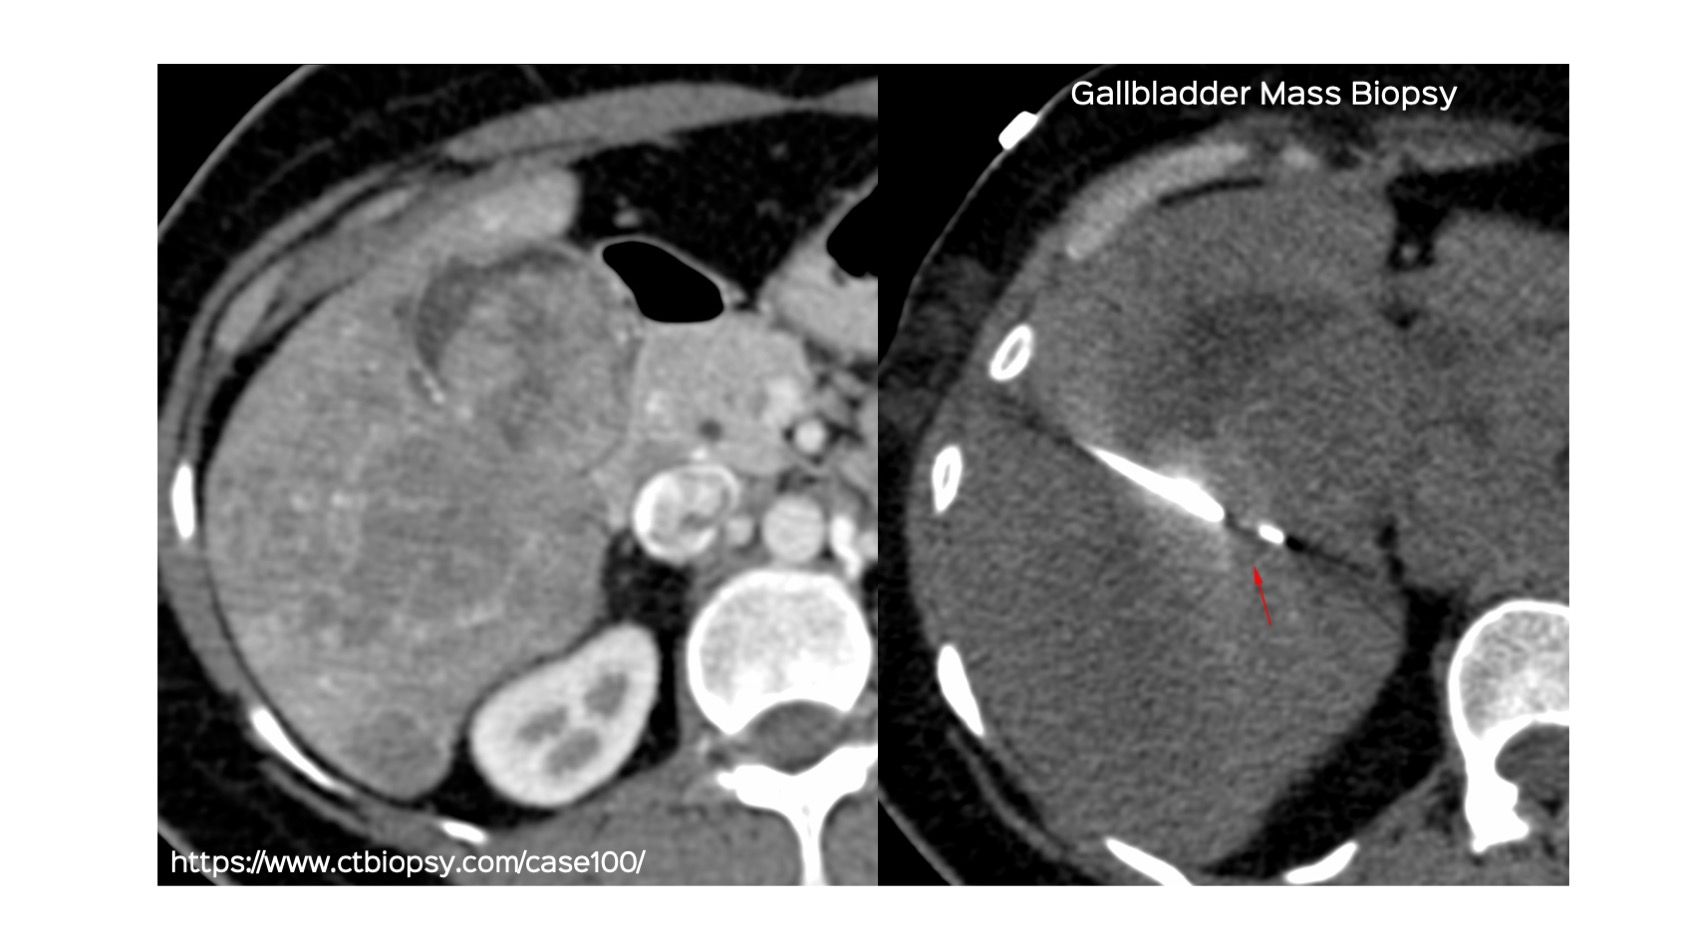 Case 100: Gallbladder Mass Biopsy